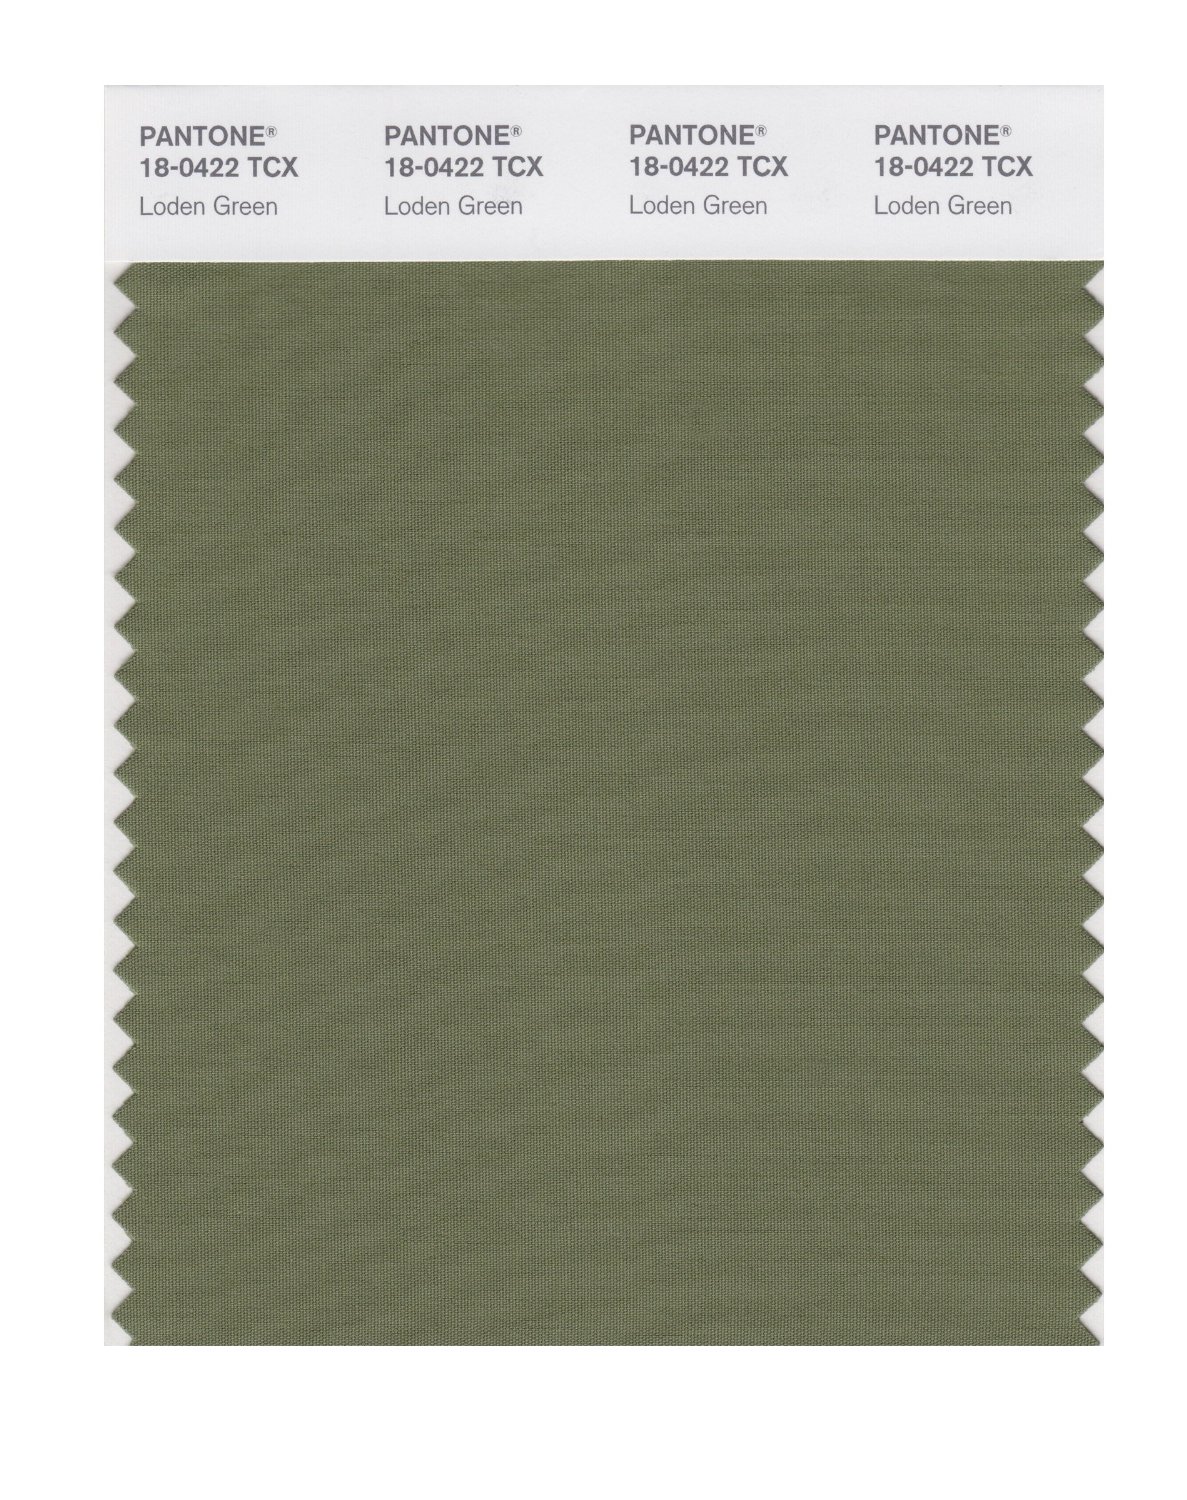 Pantone Cotton Swatch 18-0422 Loden Green